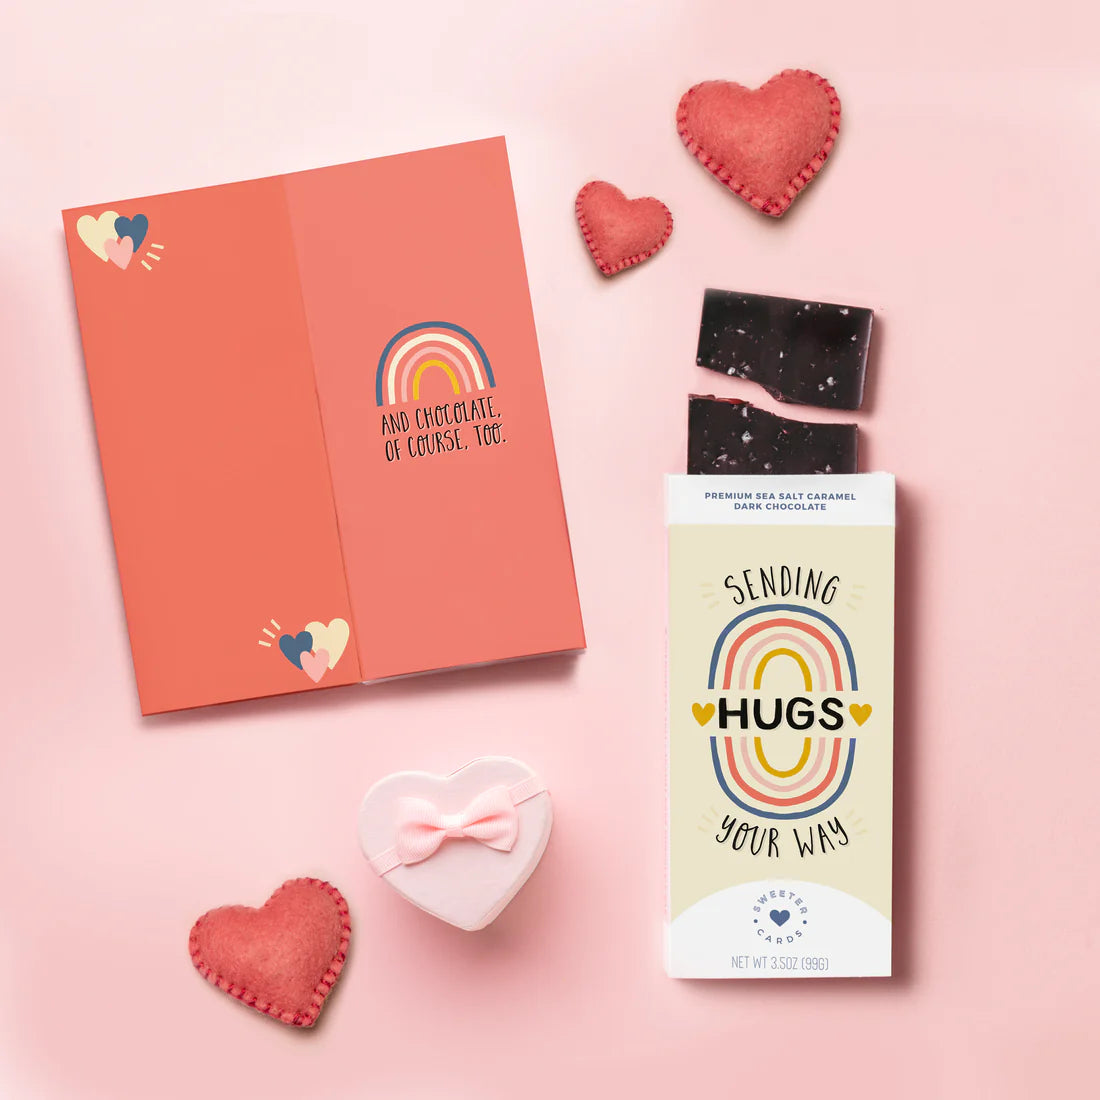 Chocolate card - Sending Hugs